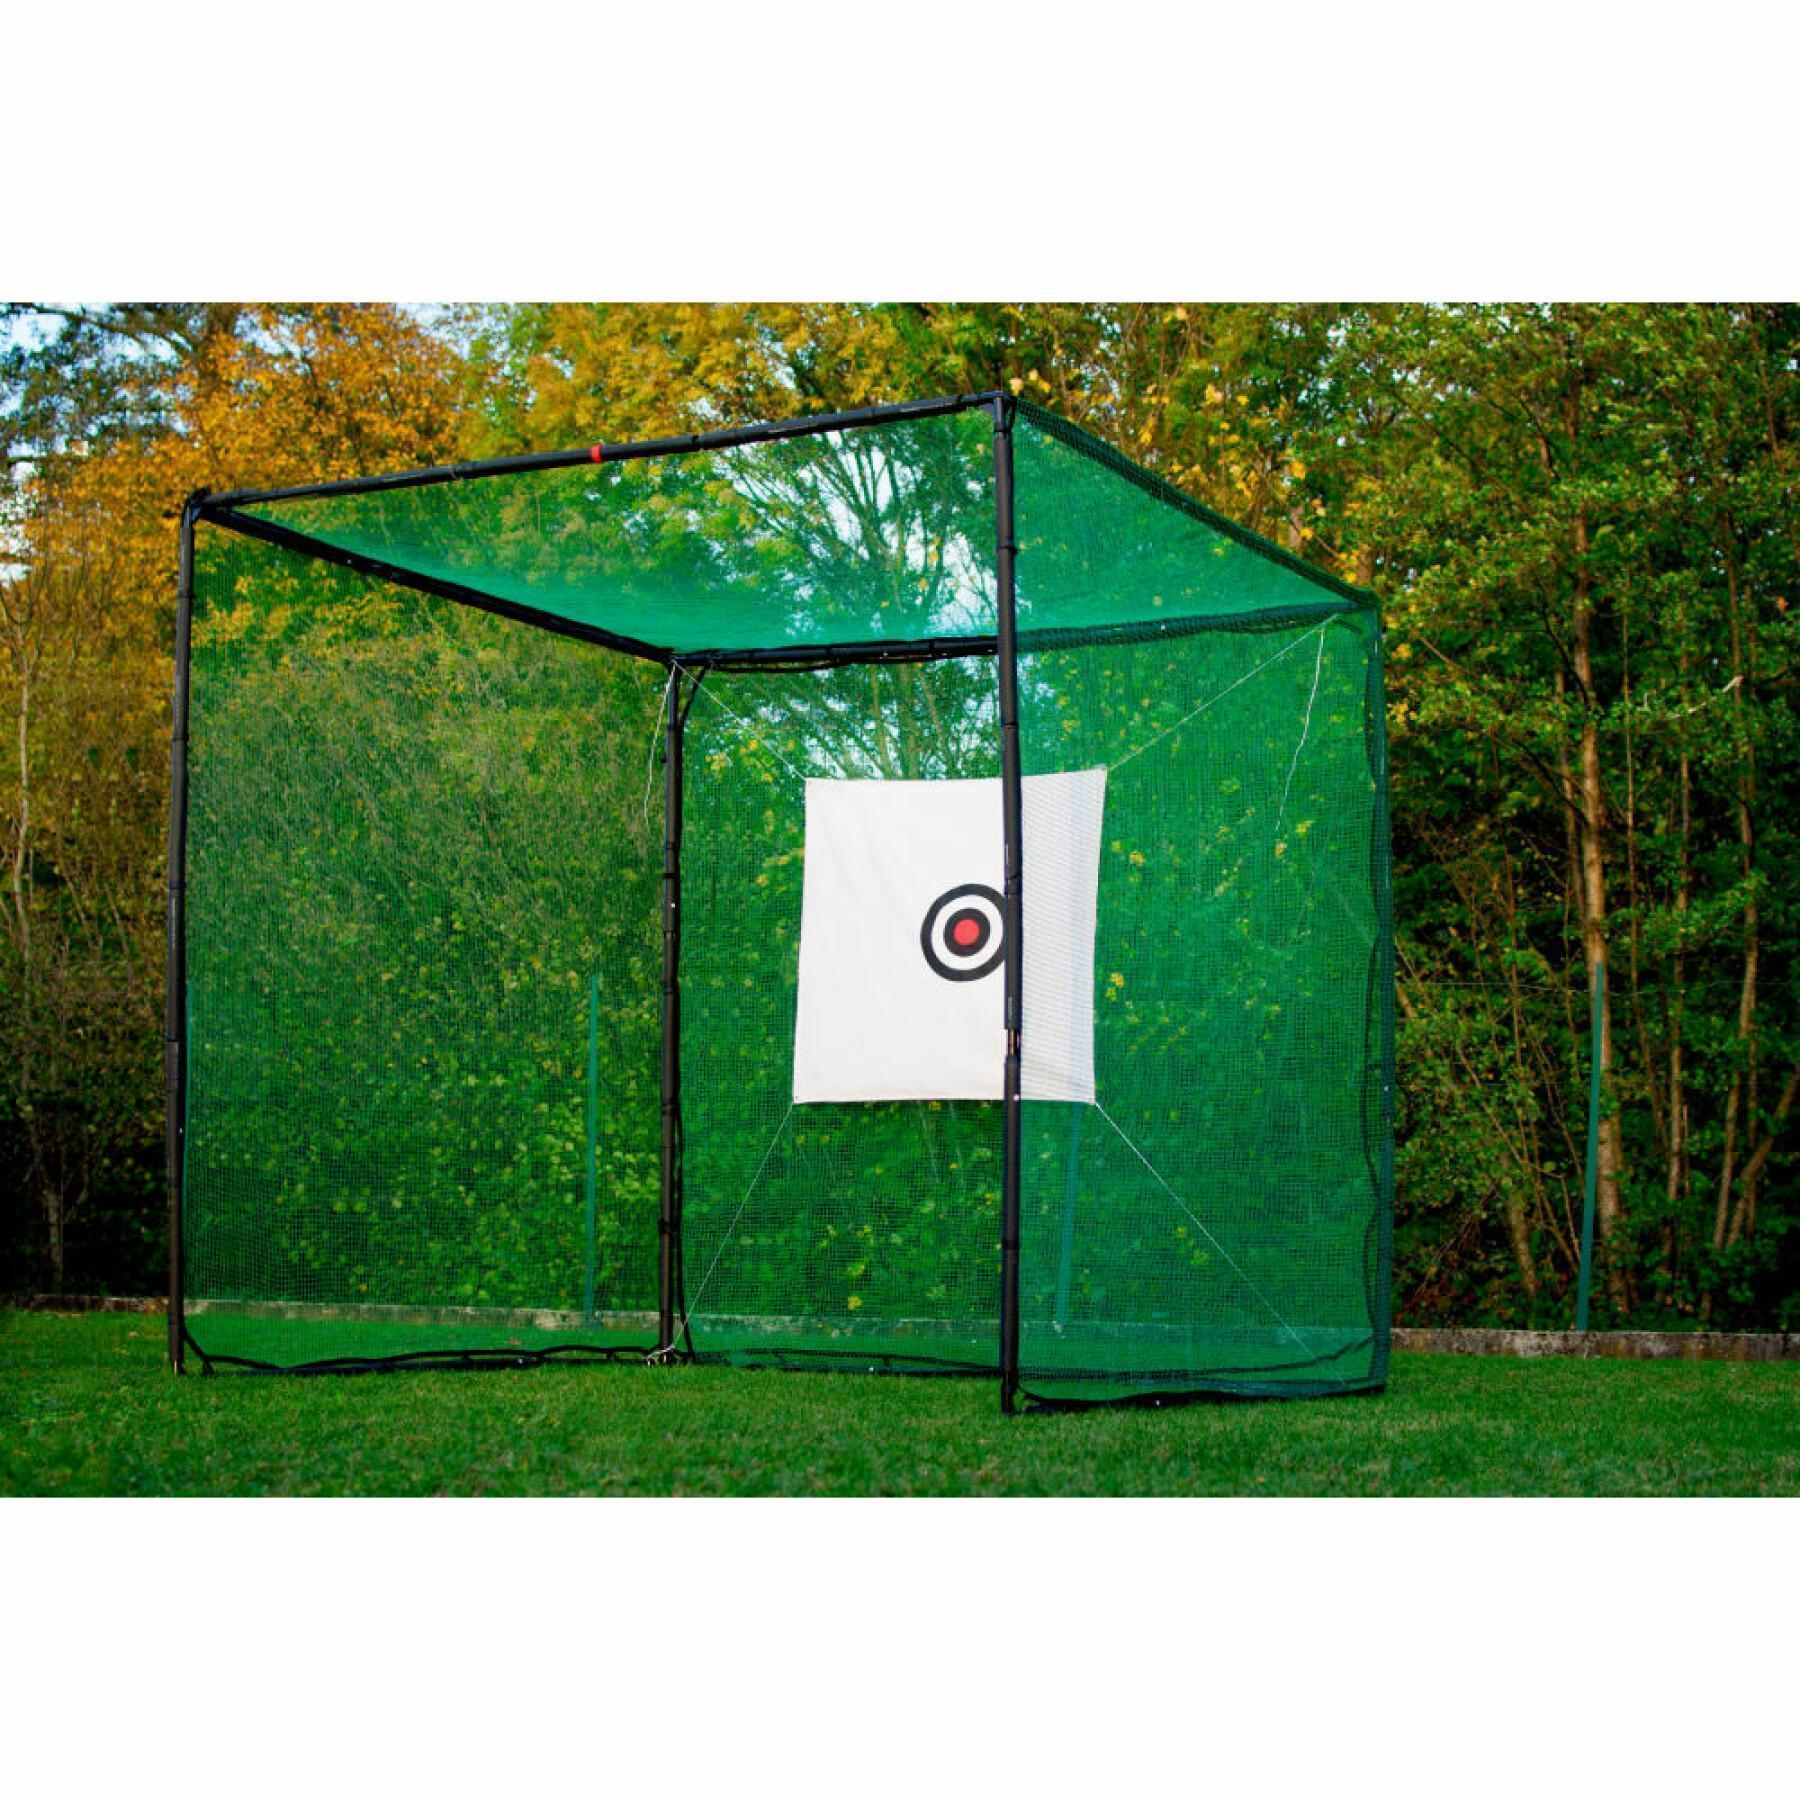 Cage de golf - 3 x 3 x 3m PowerShot